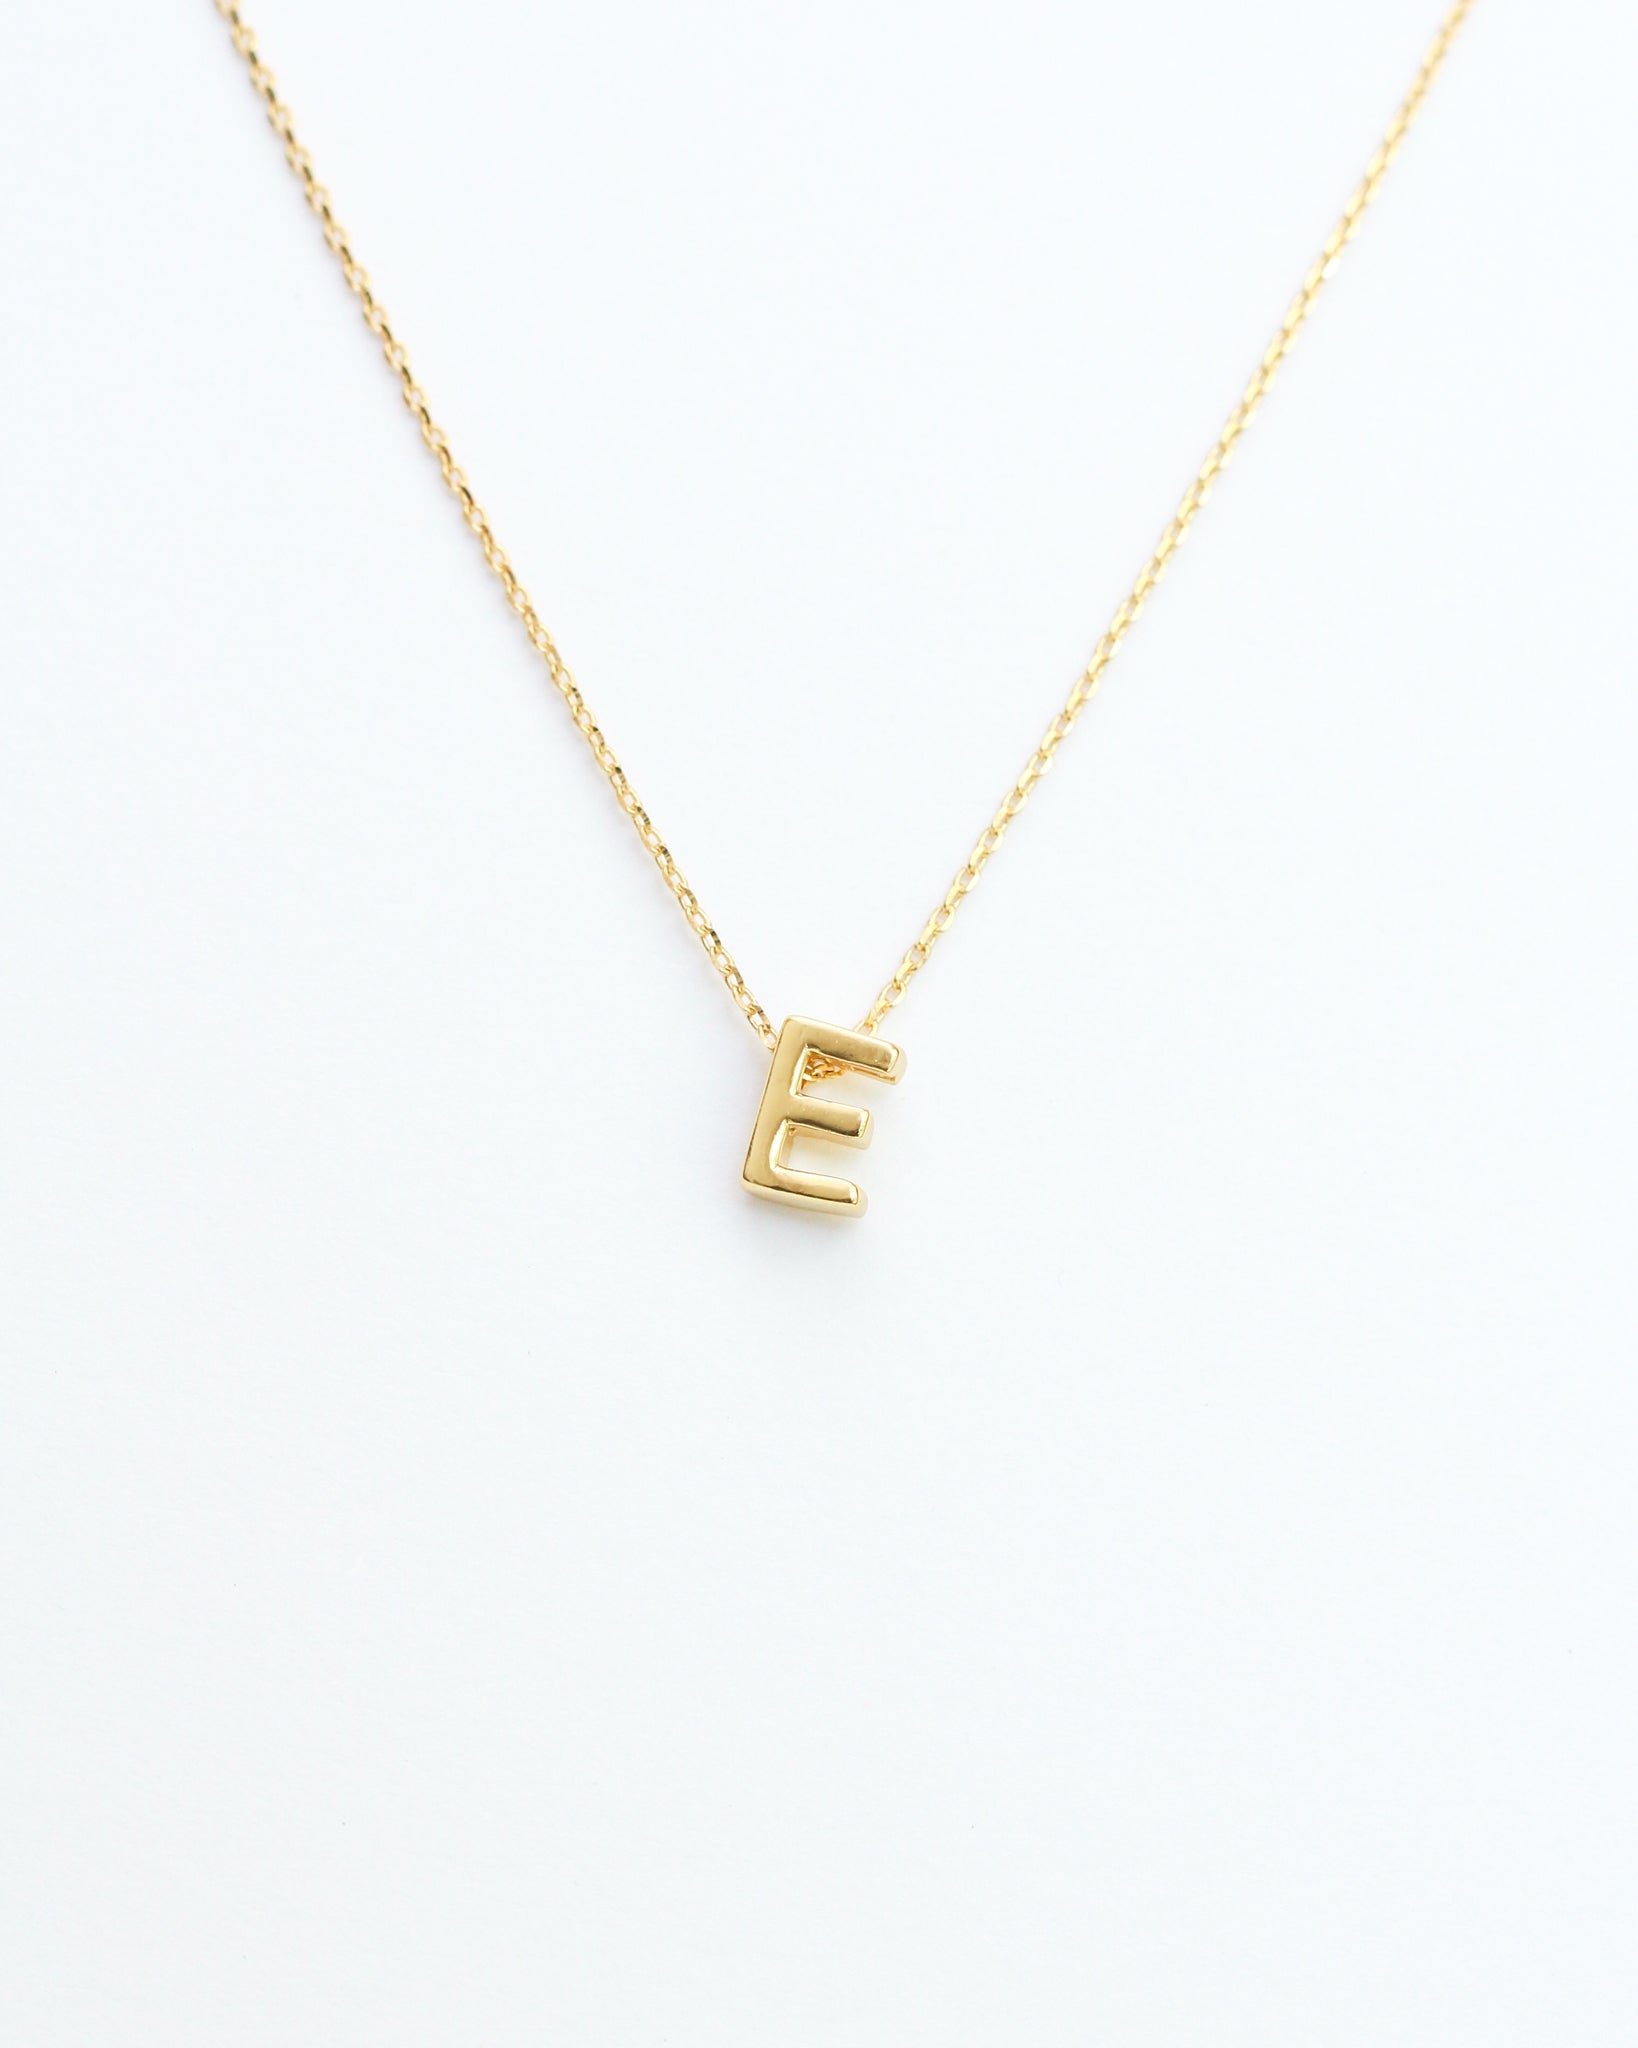 Gold Initial Letter Block Necklace. Letter E necklace